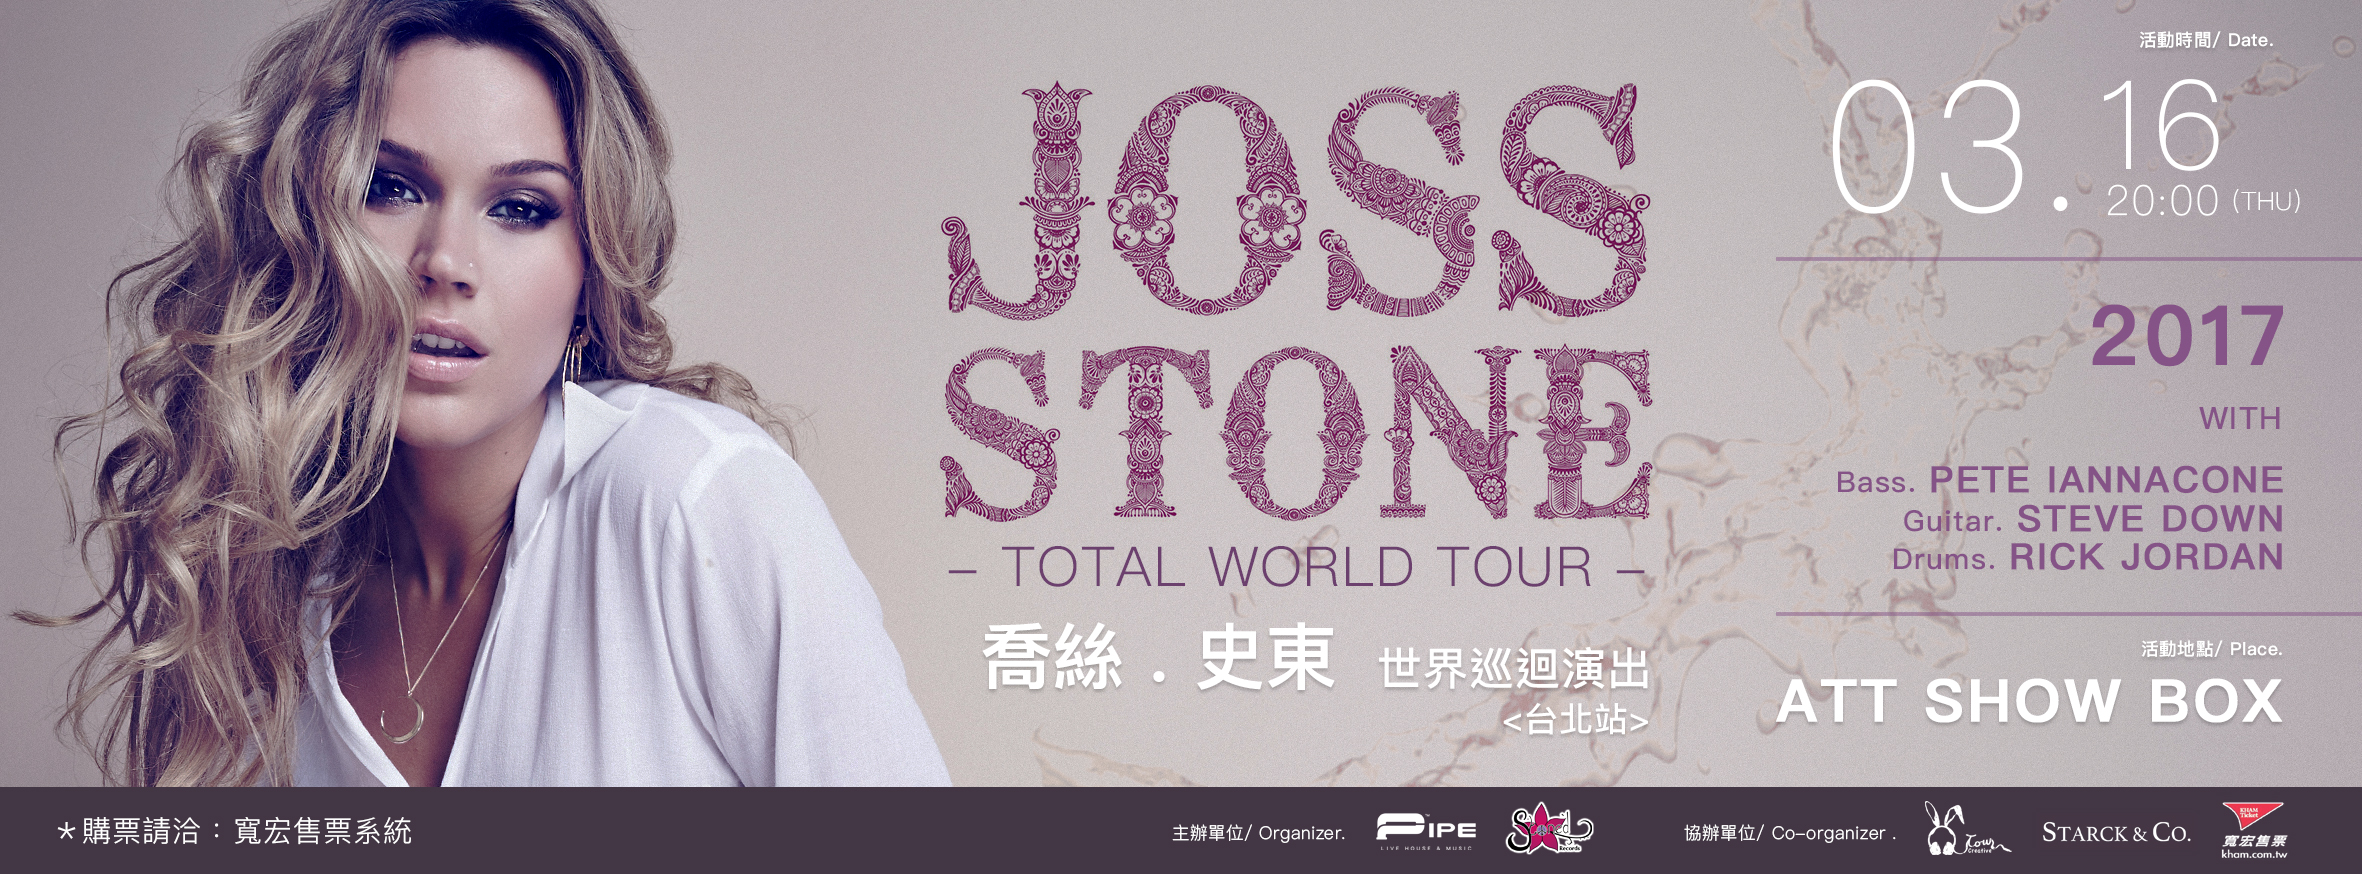 Joss Stone亞洲巡迴 臉書Banner.jpg